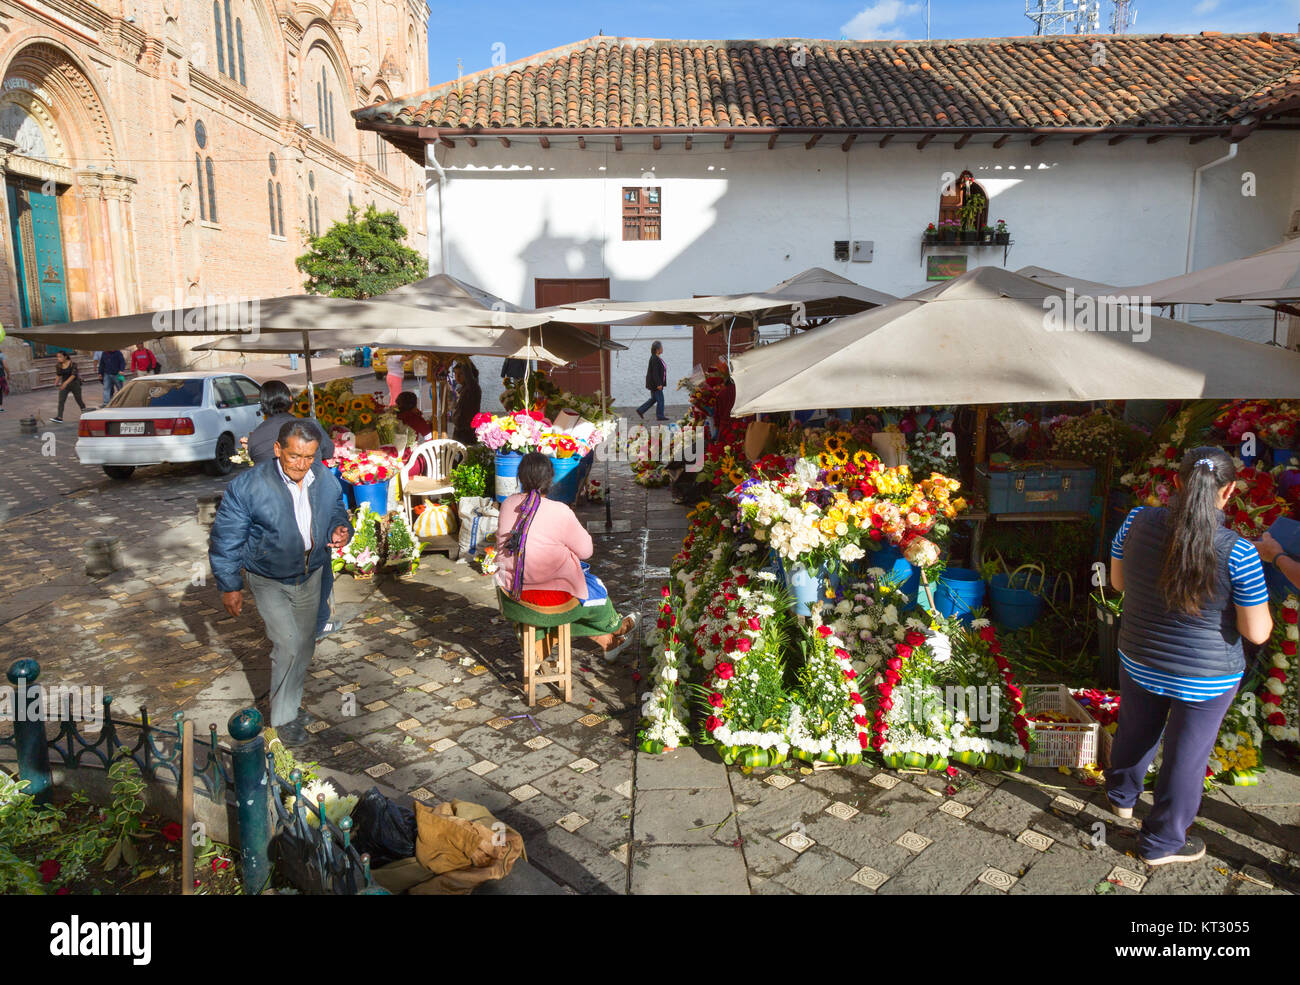 Cuenca Ecuador Südamerika - Marktstände Blumen verkaufen am Blumenmarkt, Cuenca, UNESCO-Weltkulturerbe, Ecuador Südamerika Stockfoto